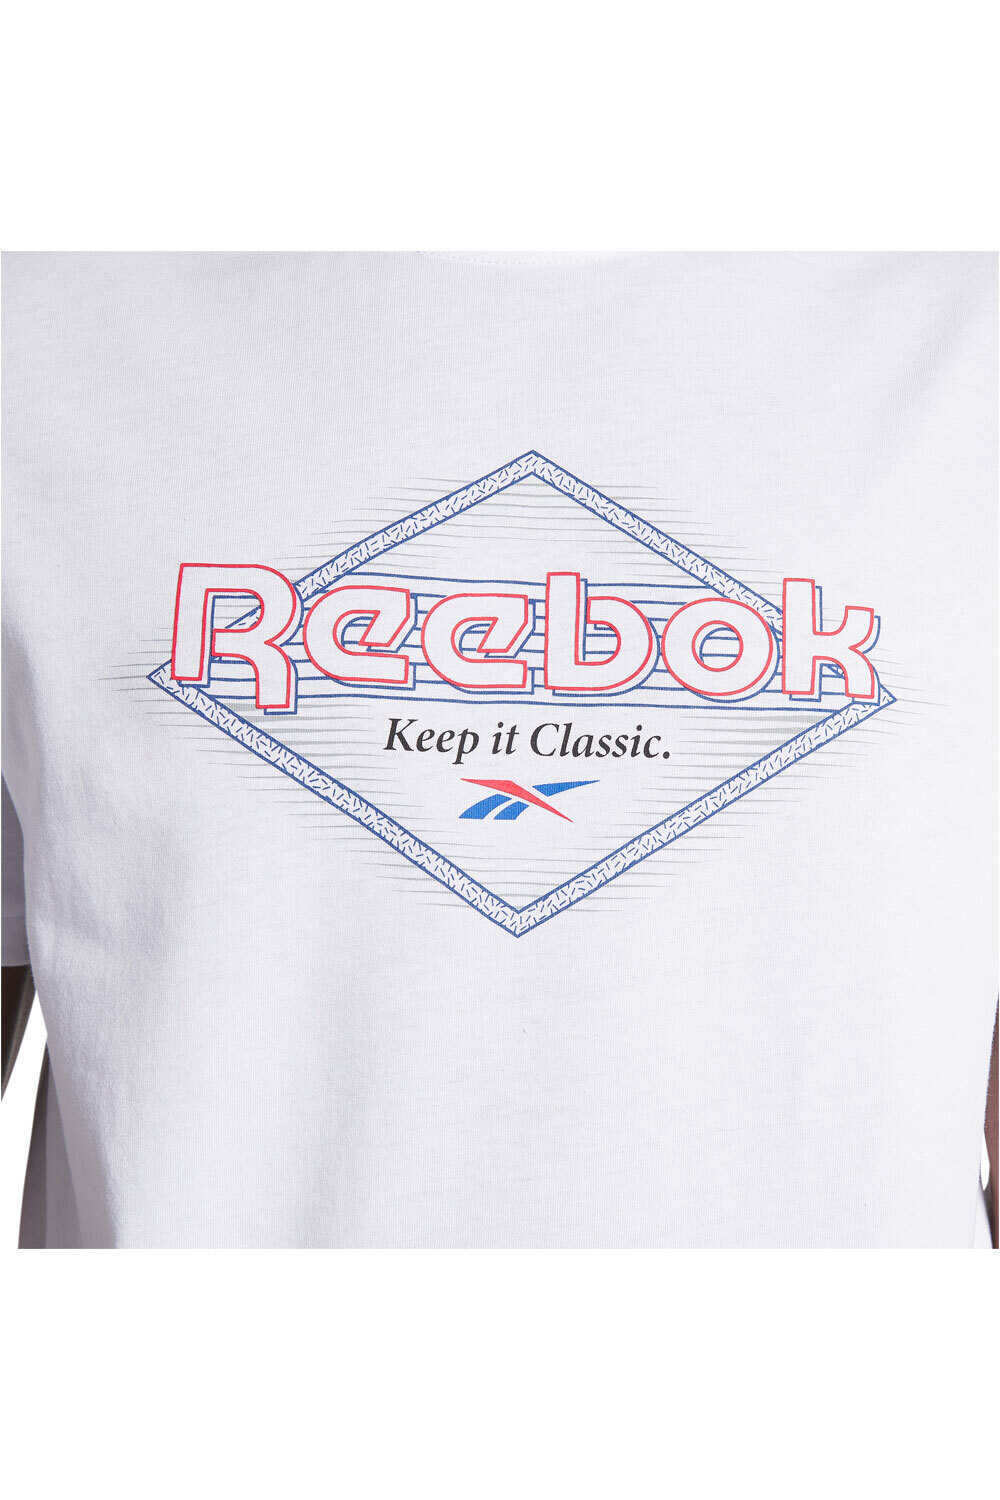 Reebok camiseta manga corta hombre GS KEEP IT CLASSIC SS 03